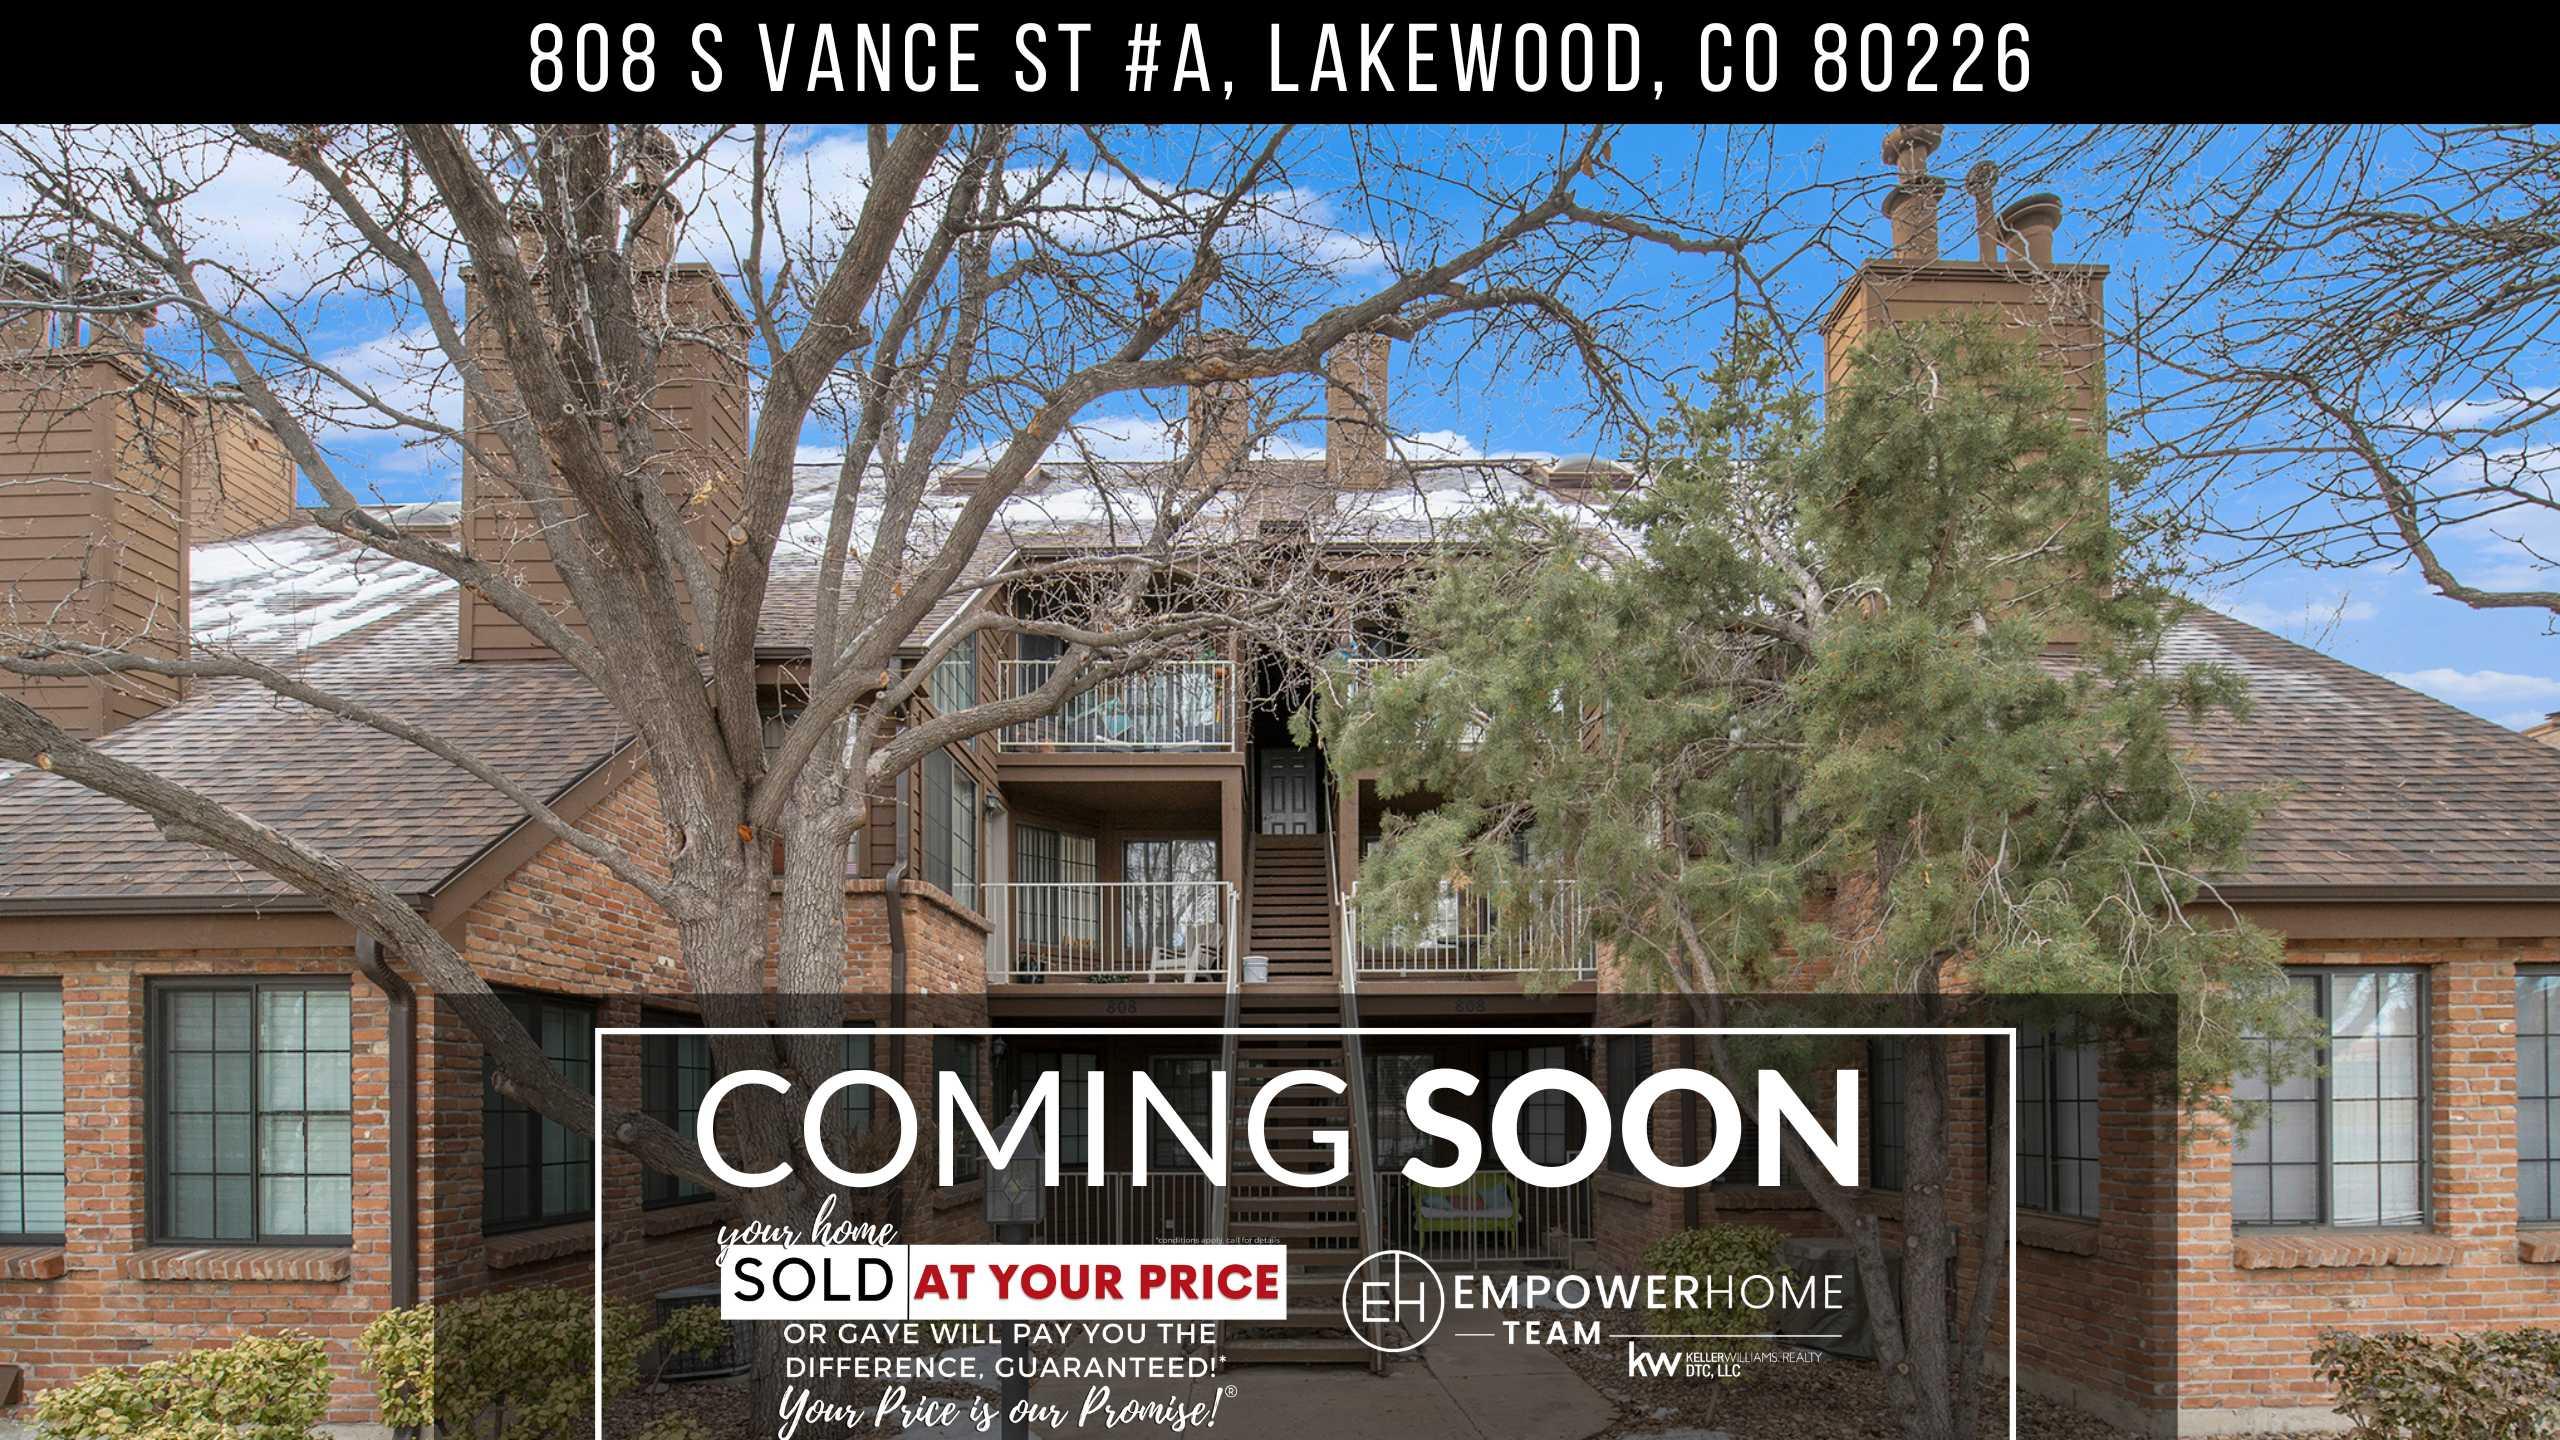 808 S Vance St #A, Lakewood, CO 80226